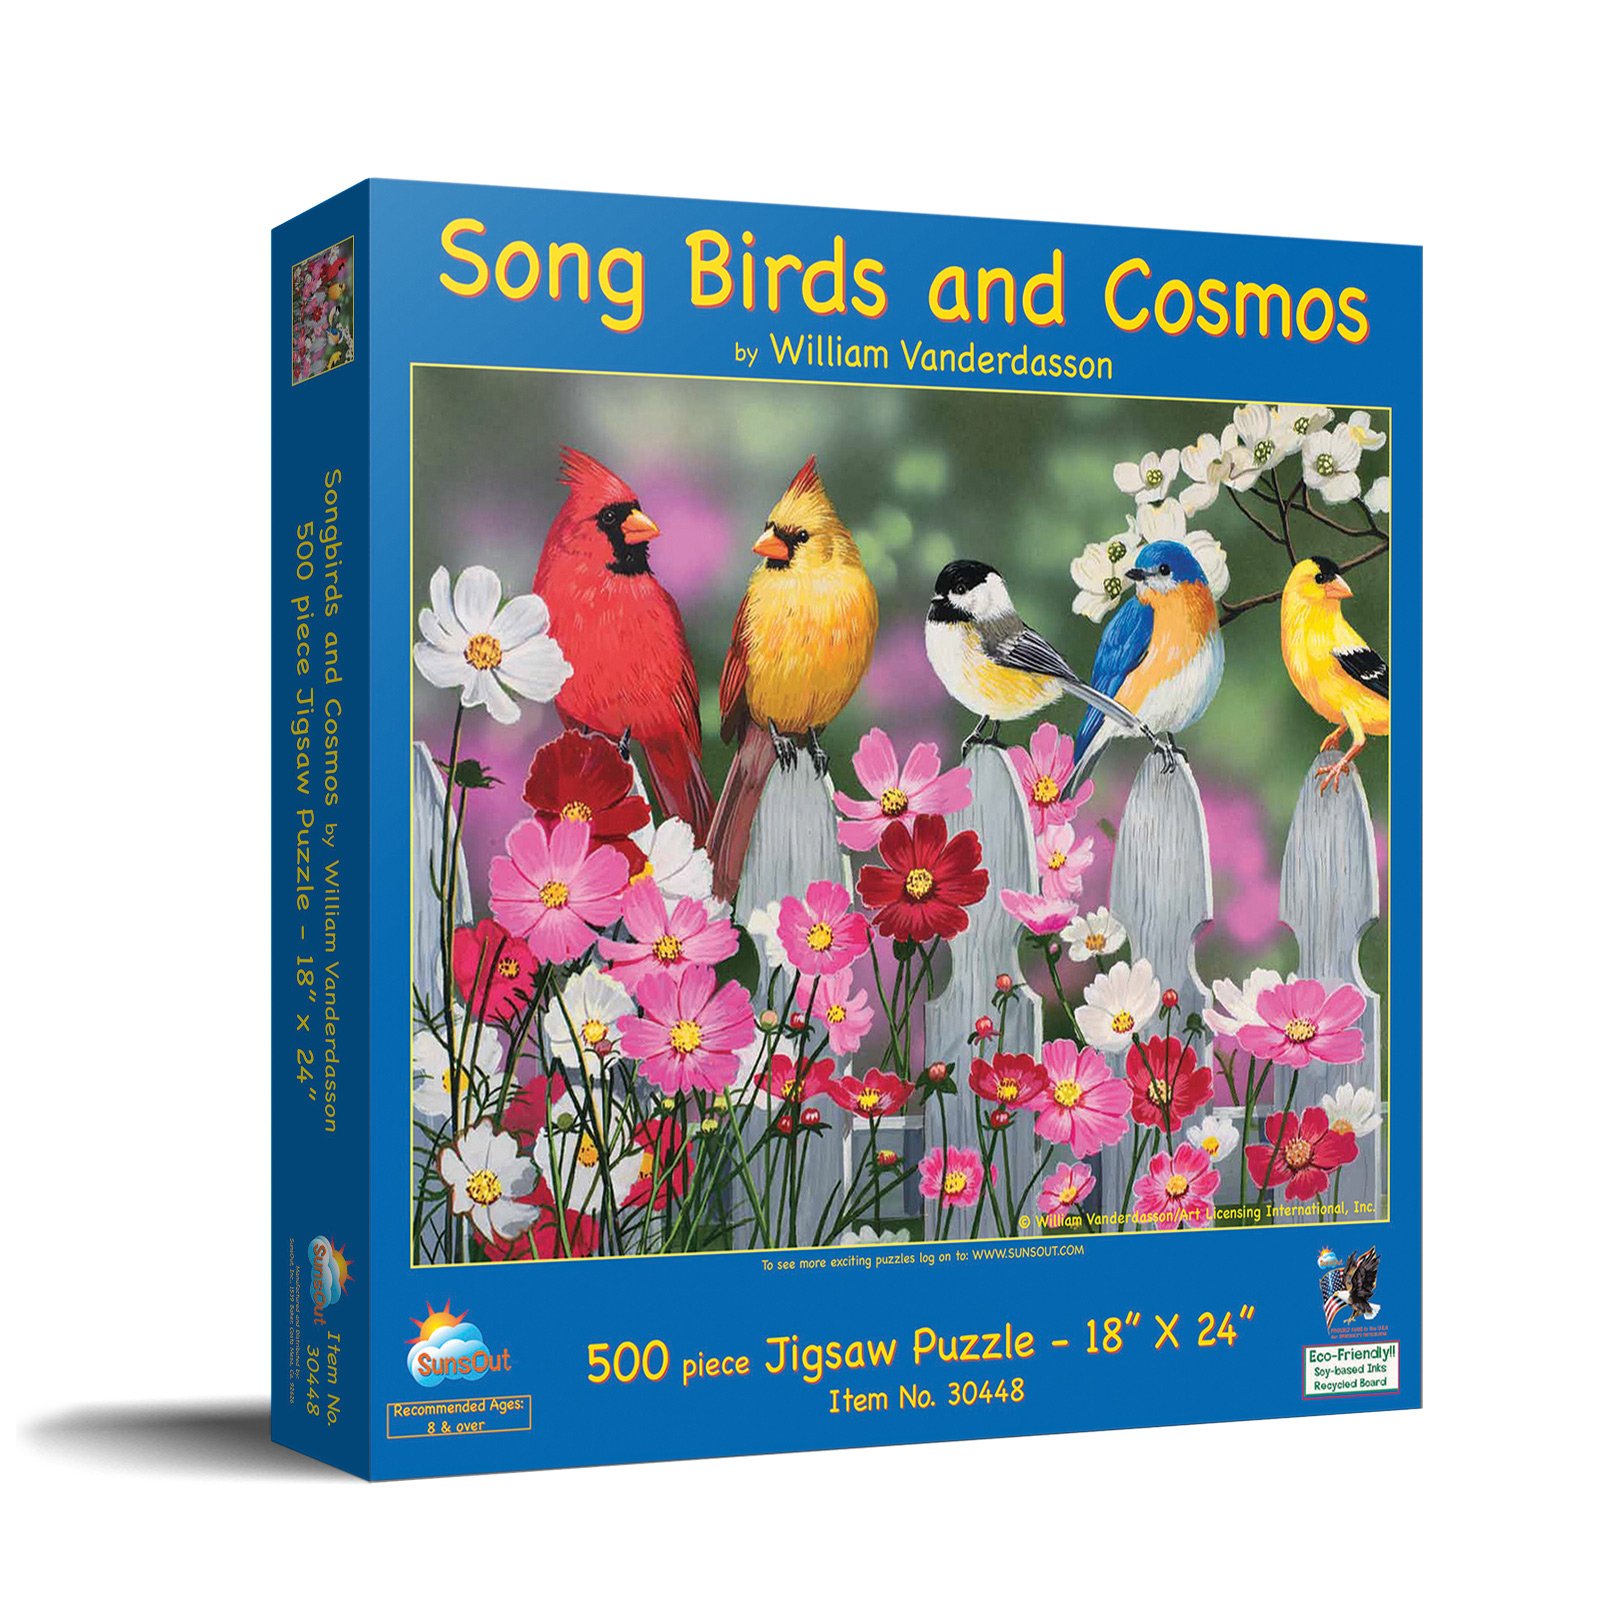 Songbirds and Cosmos